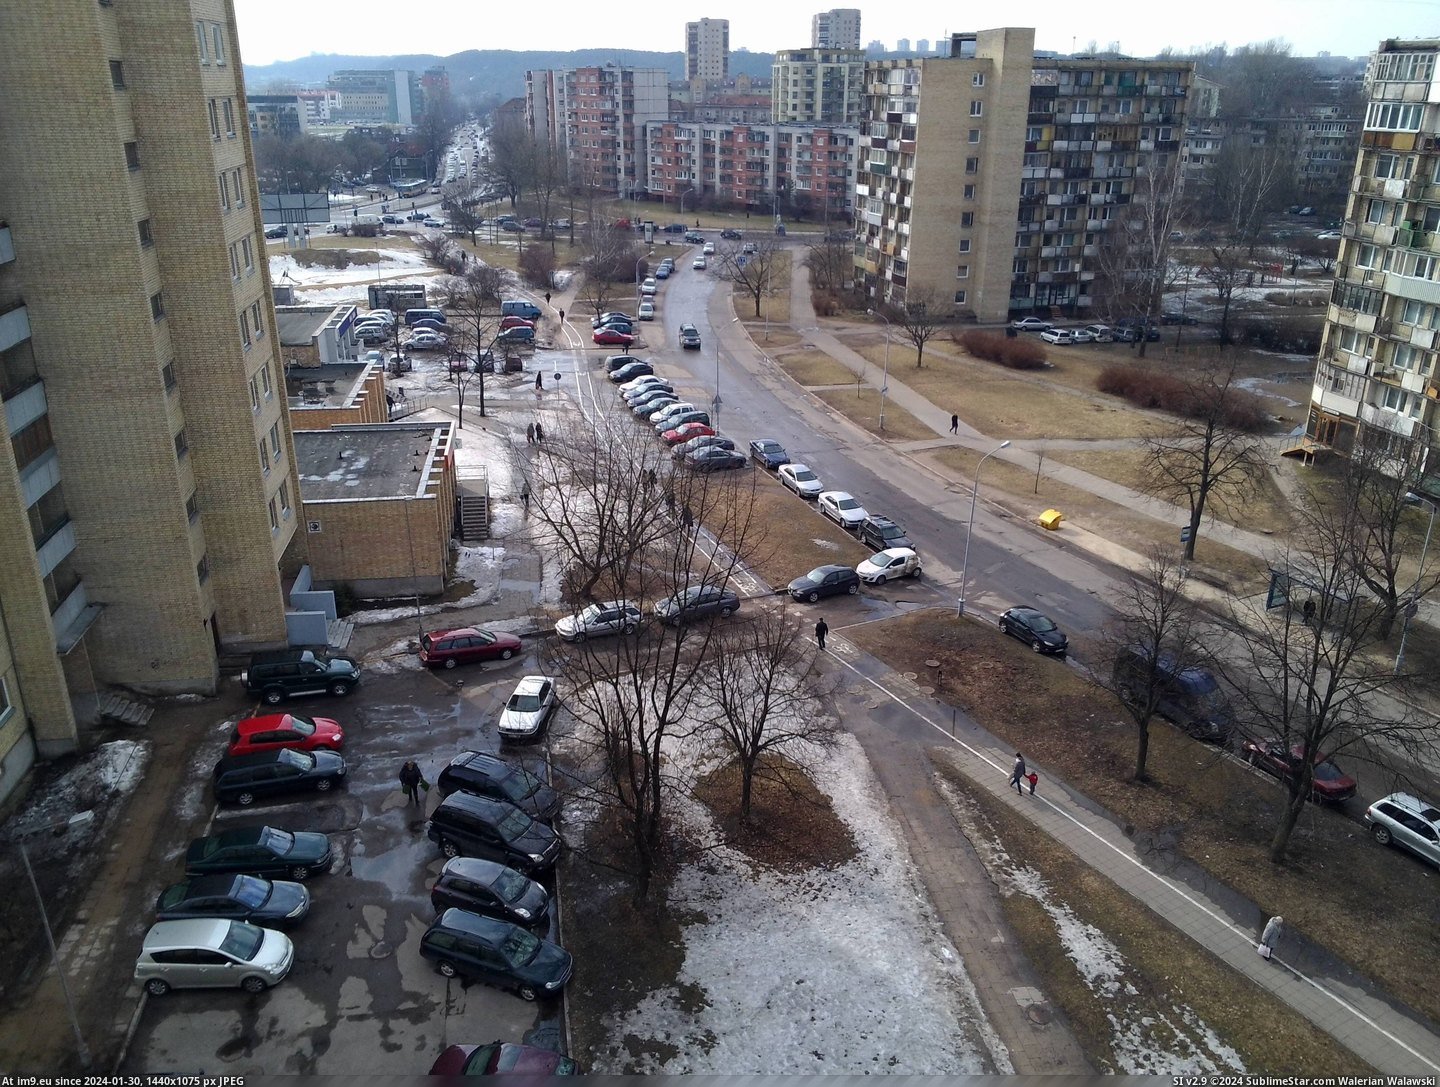  #Vilnius  20130412-1639vilnius Pic. (Bild von album kovas))